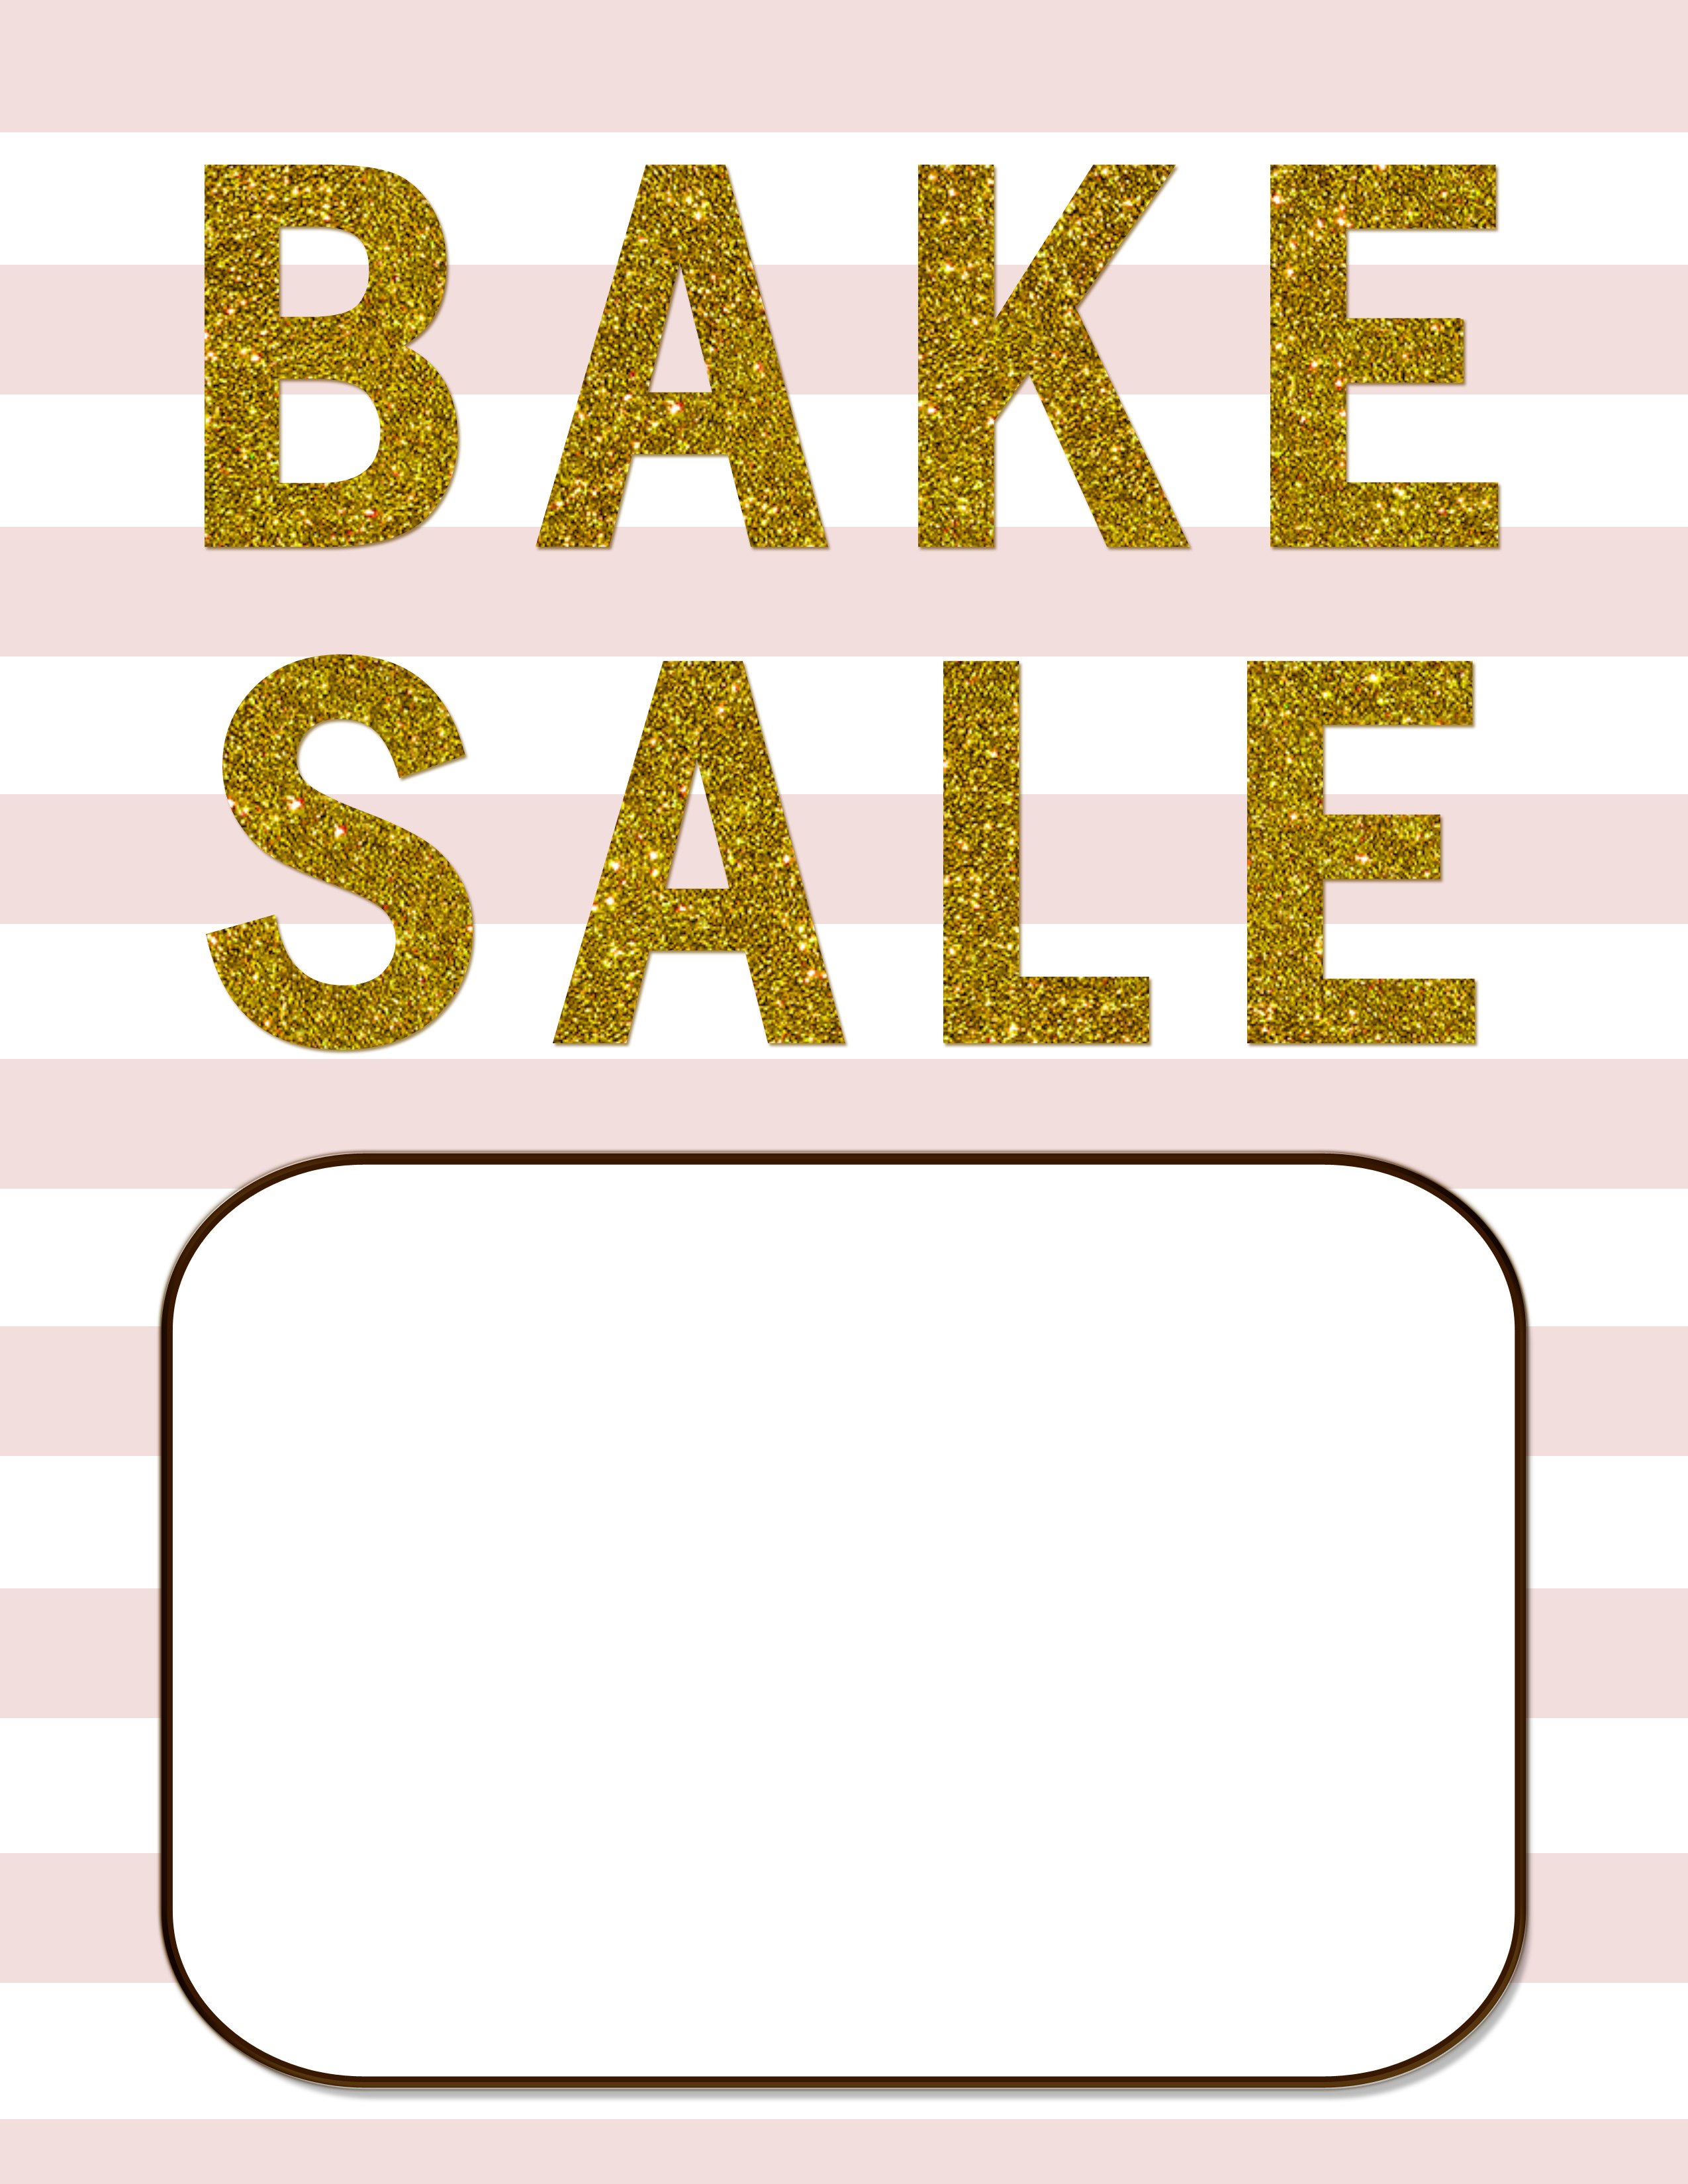 Bake Sale Flyers Free Flyer Designs